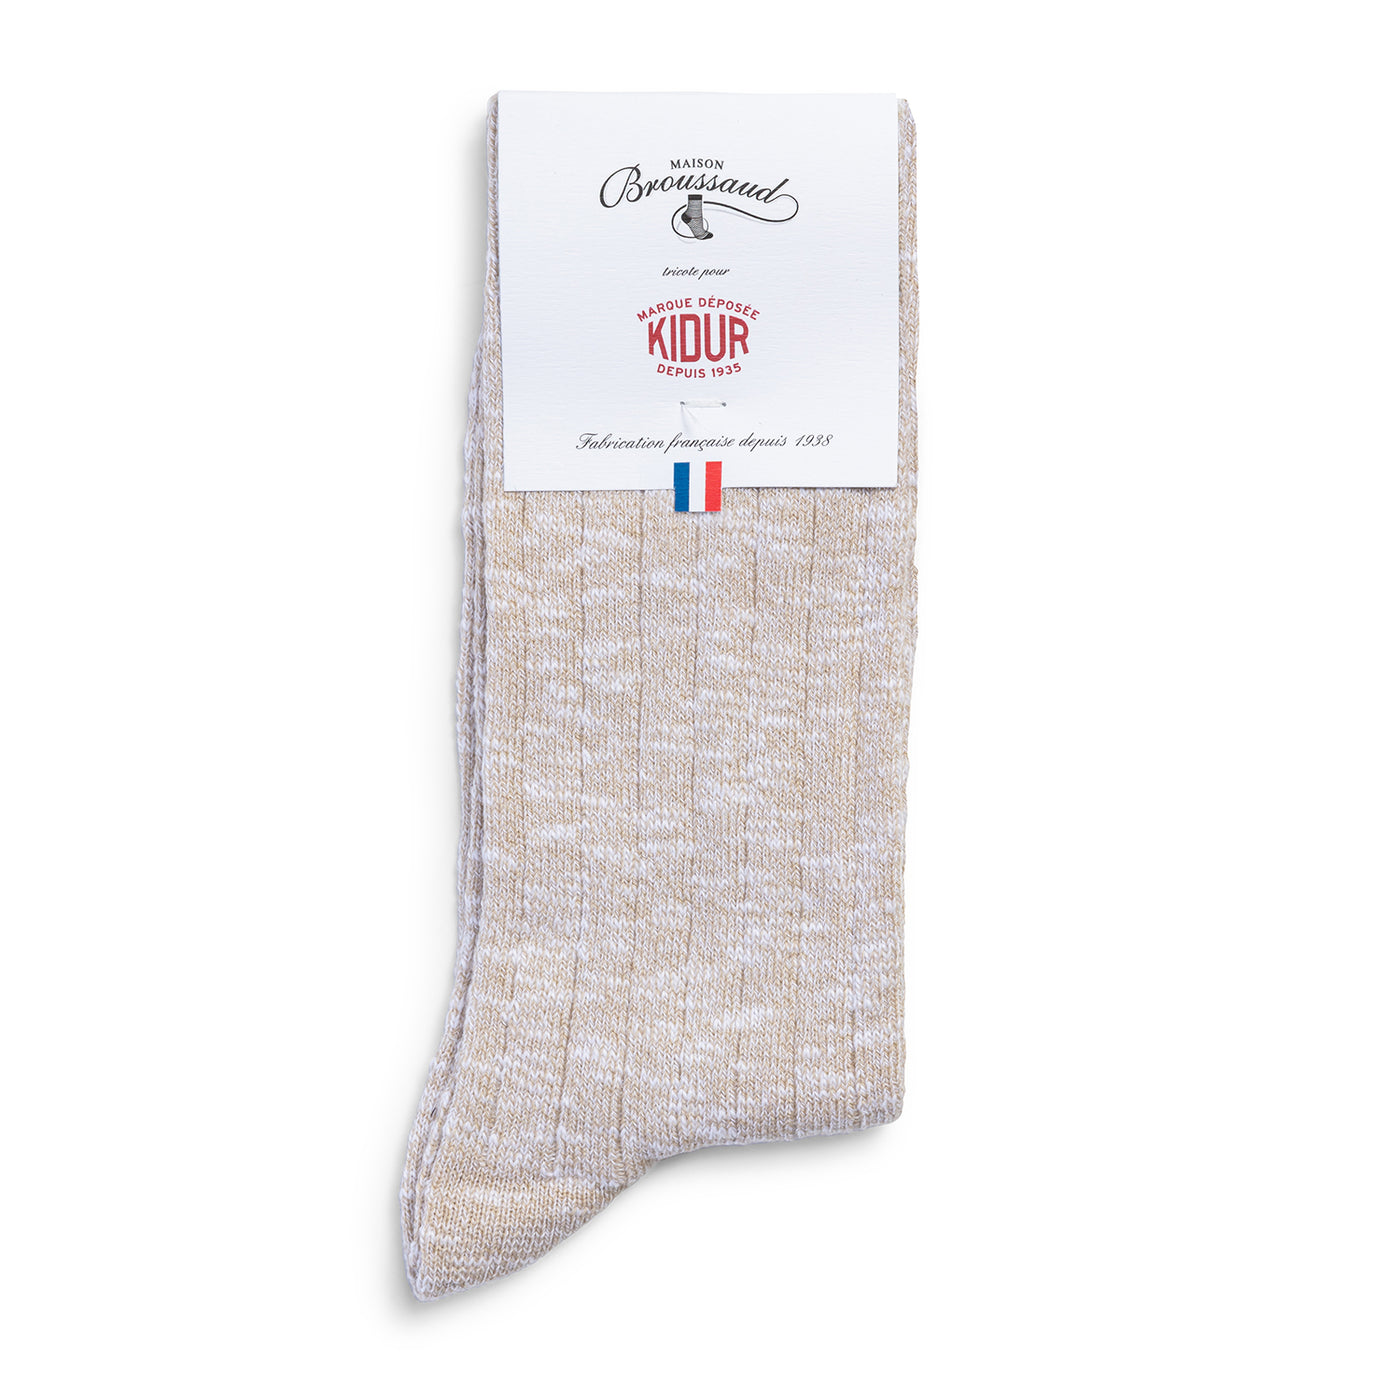 Kidur x Maison Broussaud - barley socks